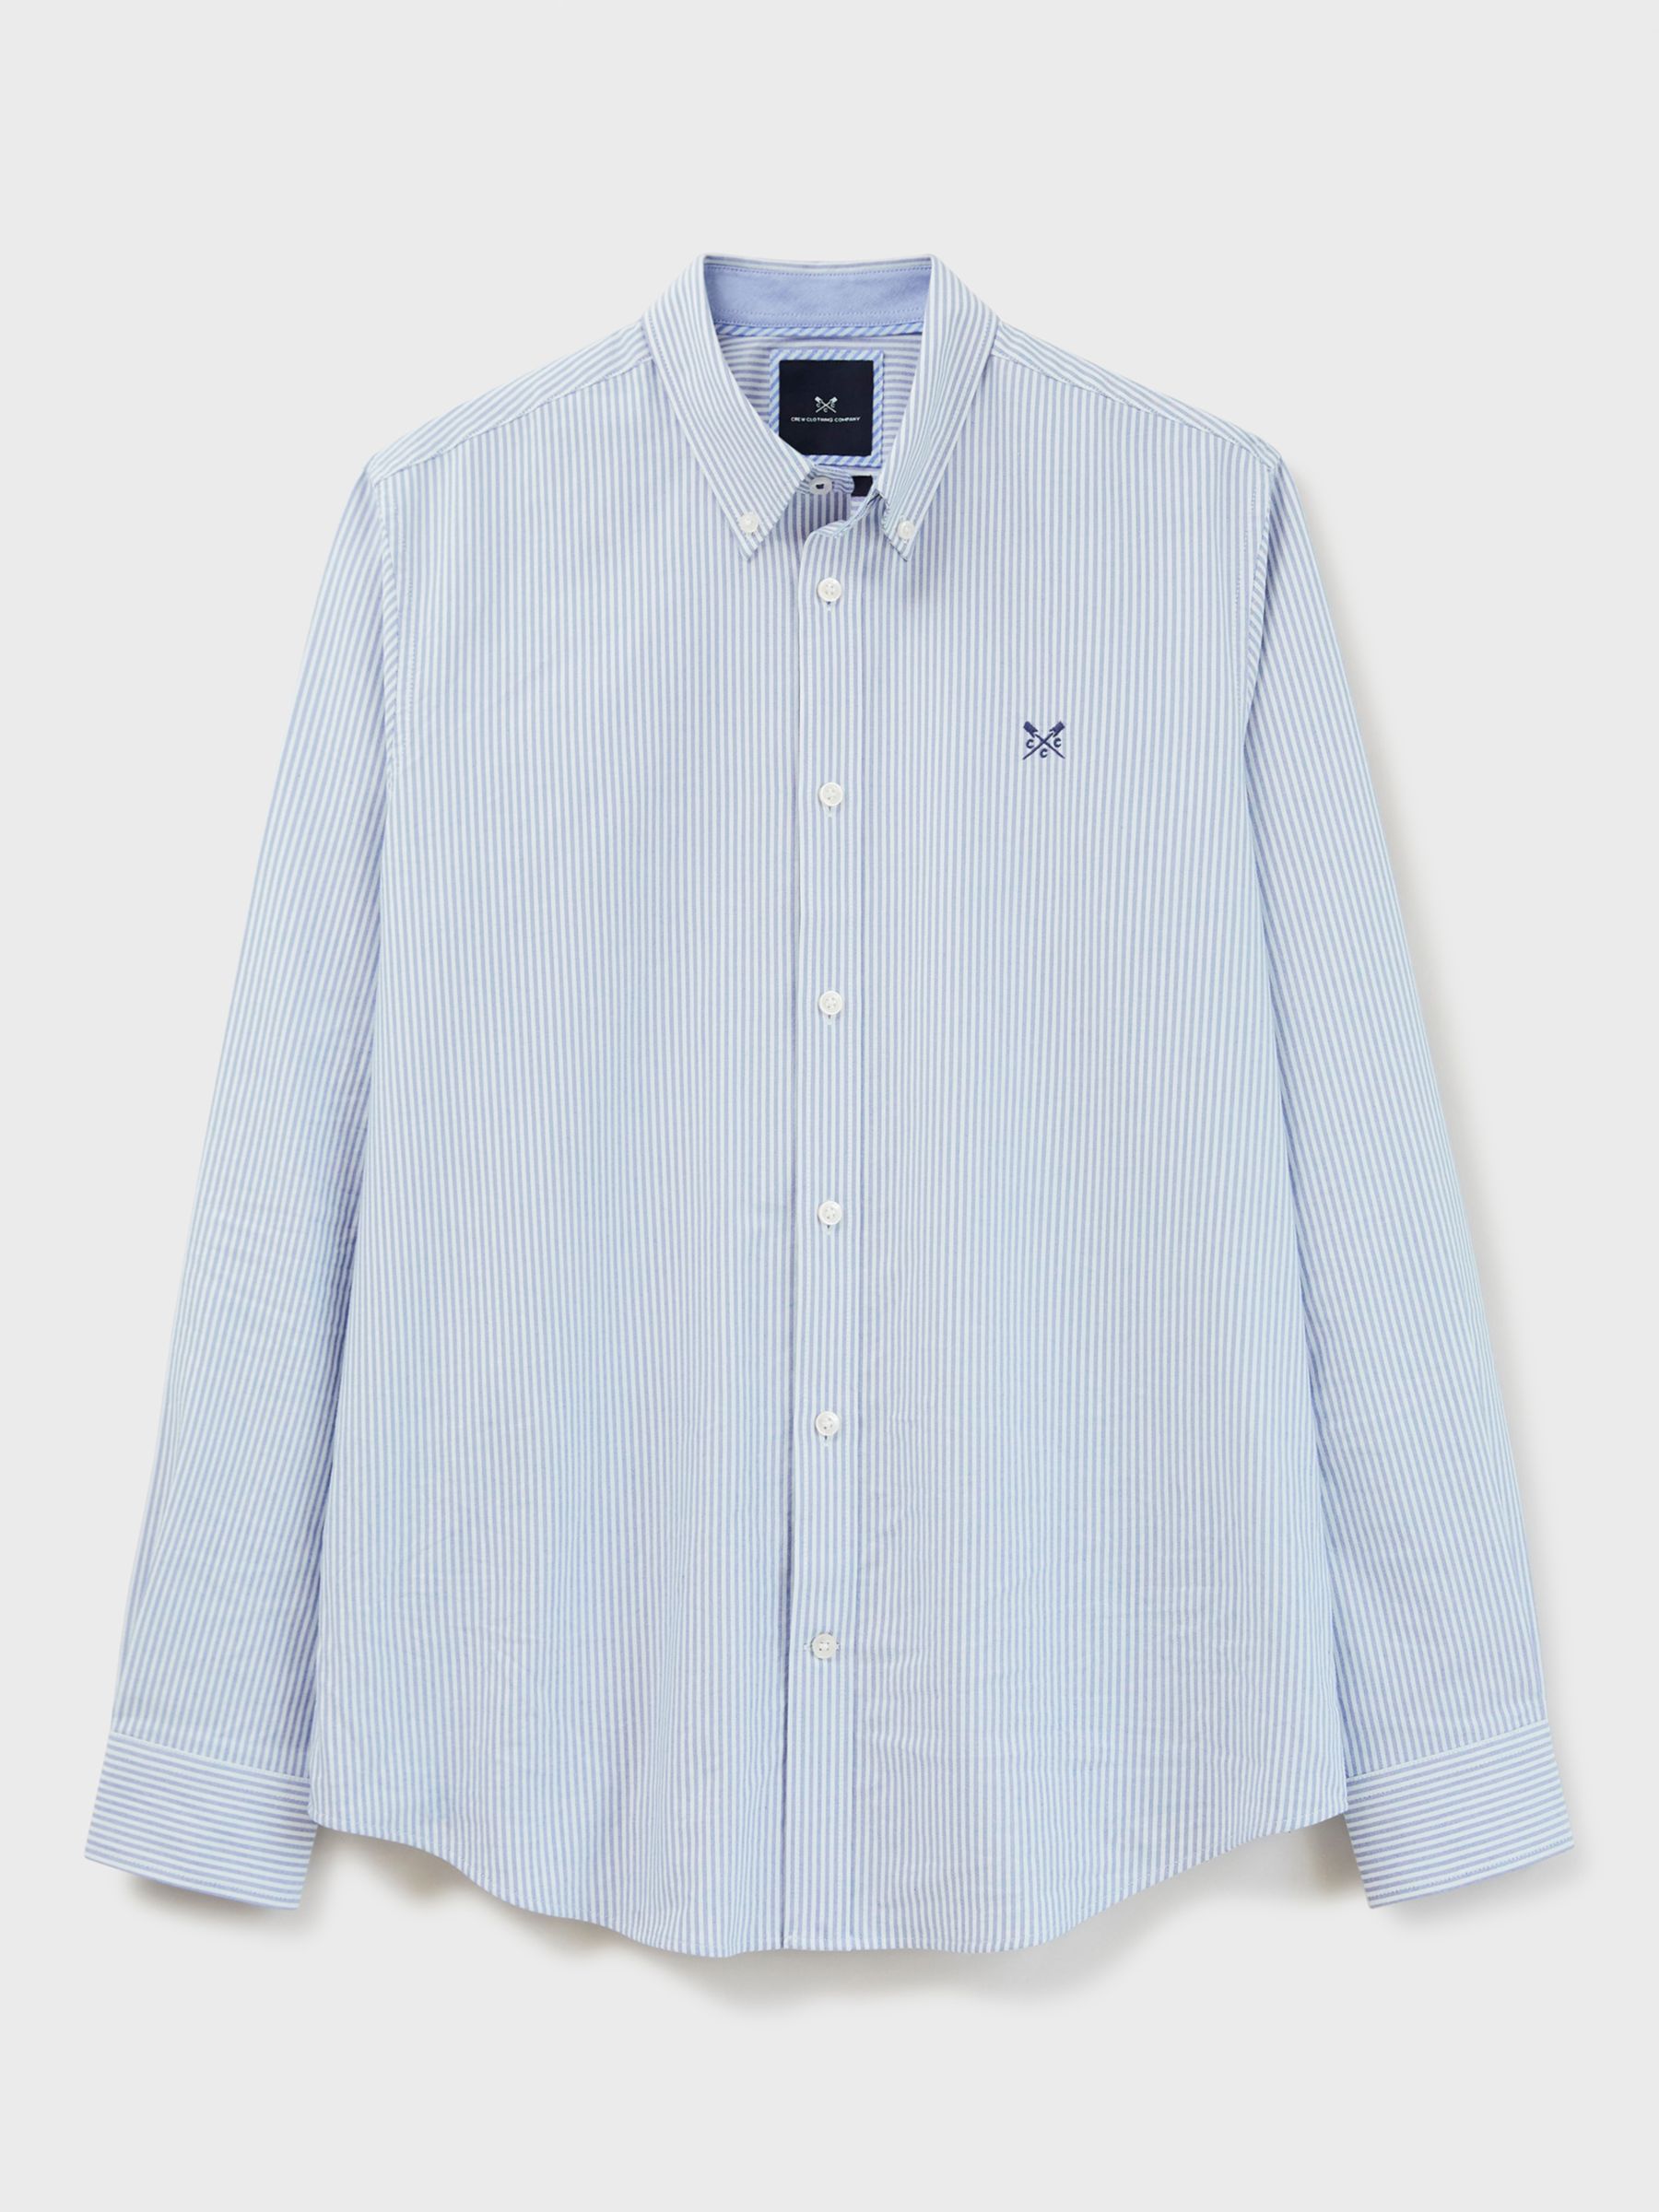 Buy Crew Clothing Oxford Stripe Cotton Shirt Online at johnlewis.com